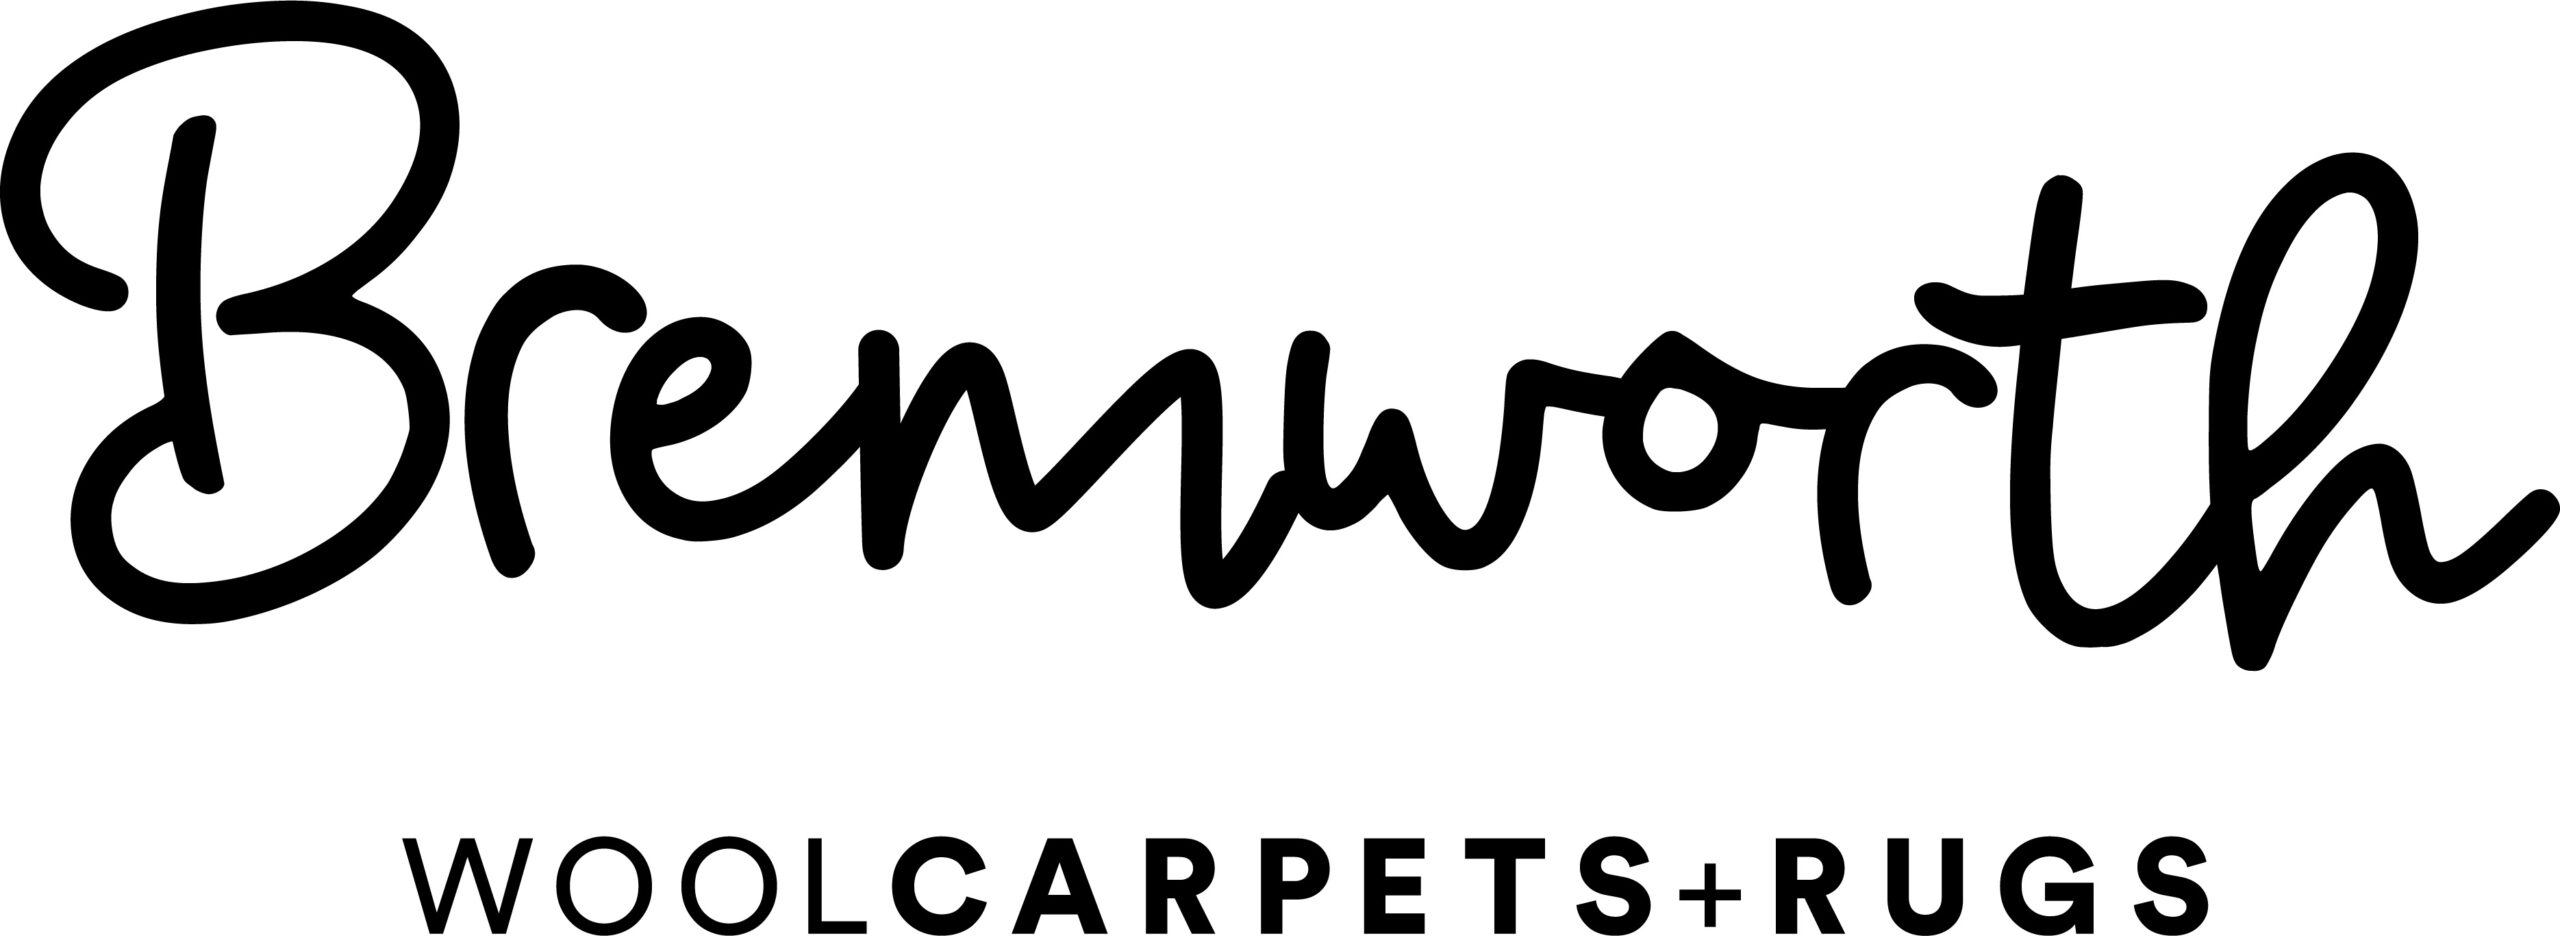 Cavalier Bremworth carpet